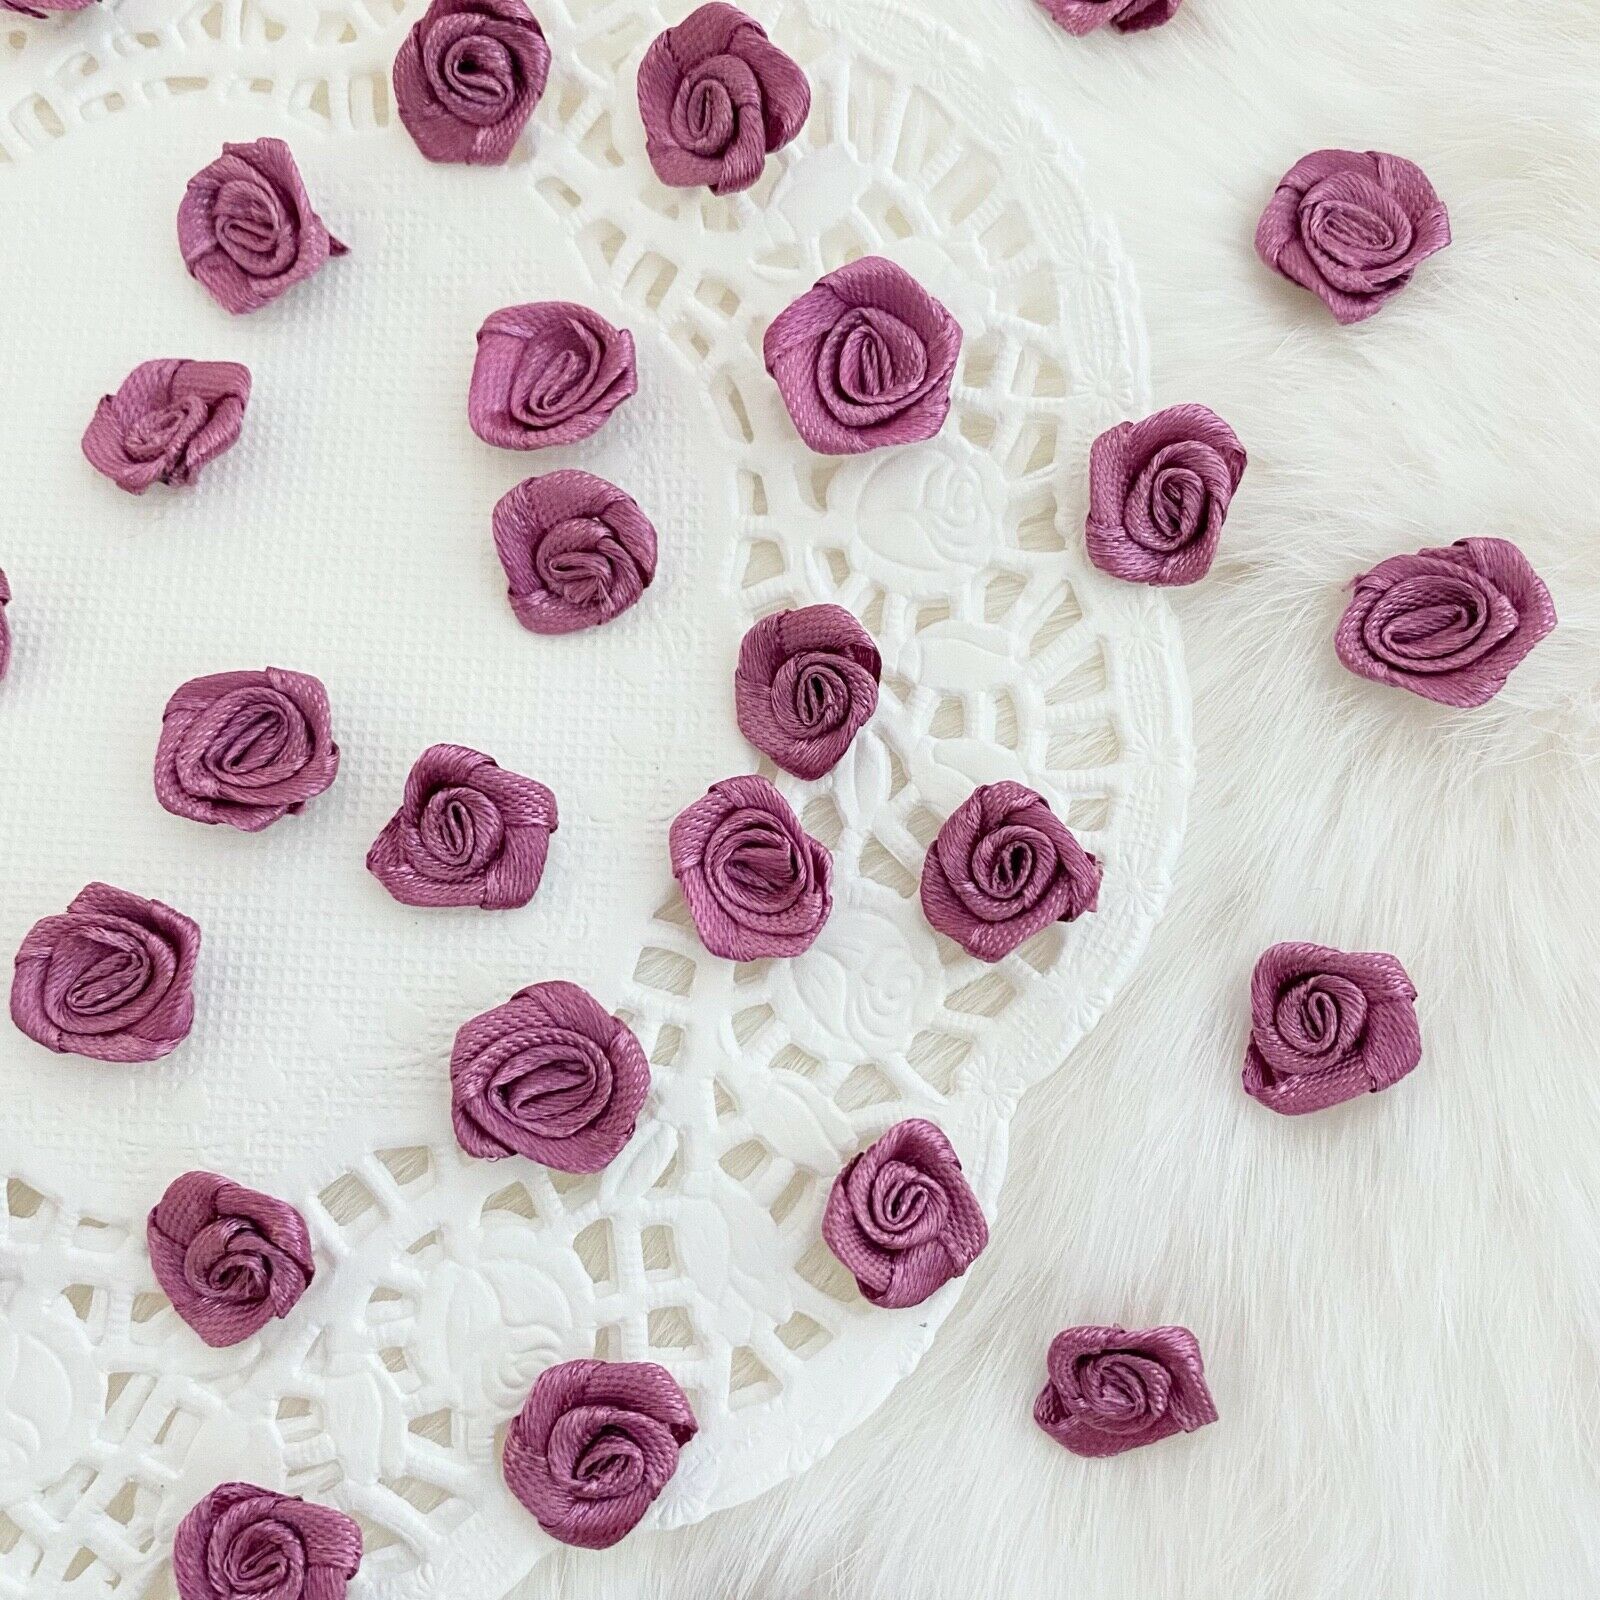 Mauve Satin Roses Mini Purple Satin Rose Buds Craft Flowers Sewing Card Making